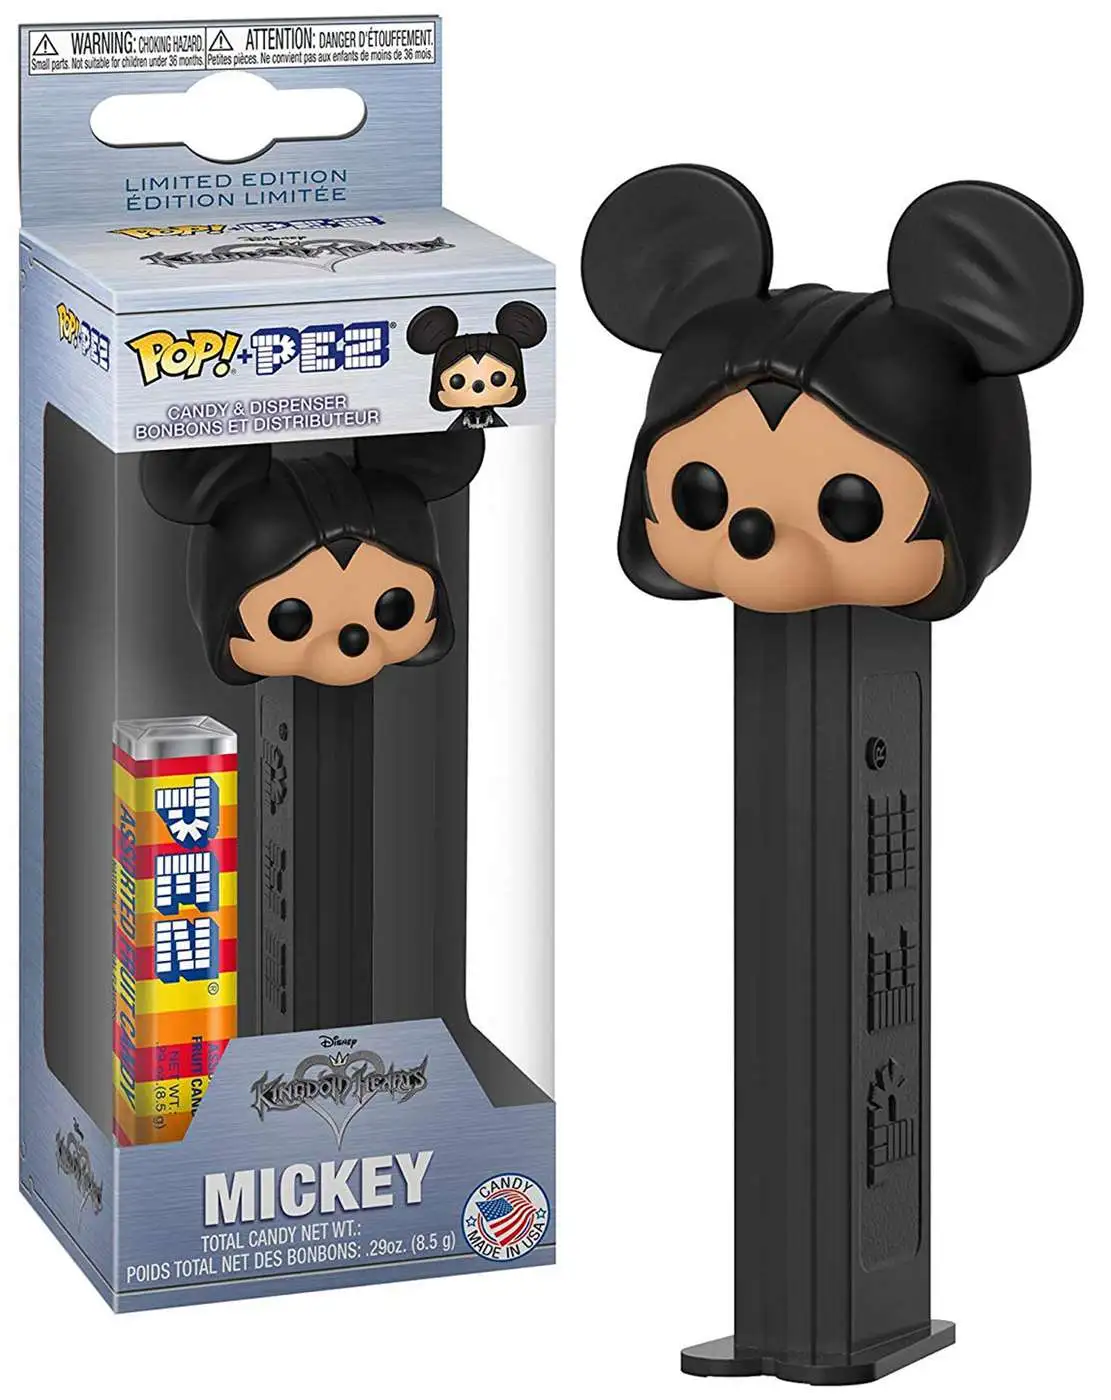 Funko Pop! Kingdom Hearts III - Mickey #489